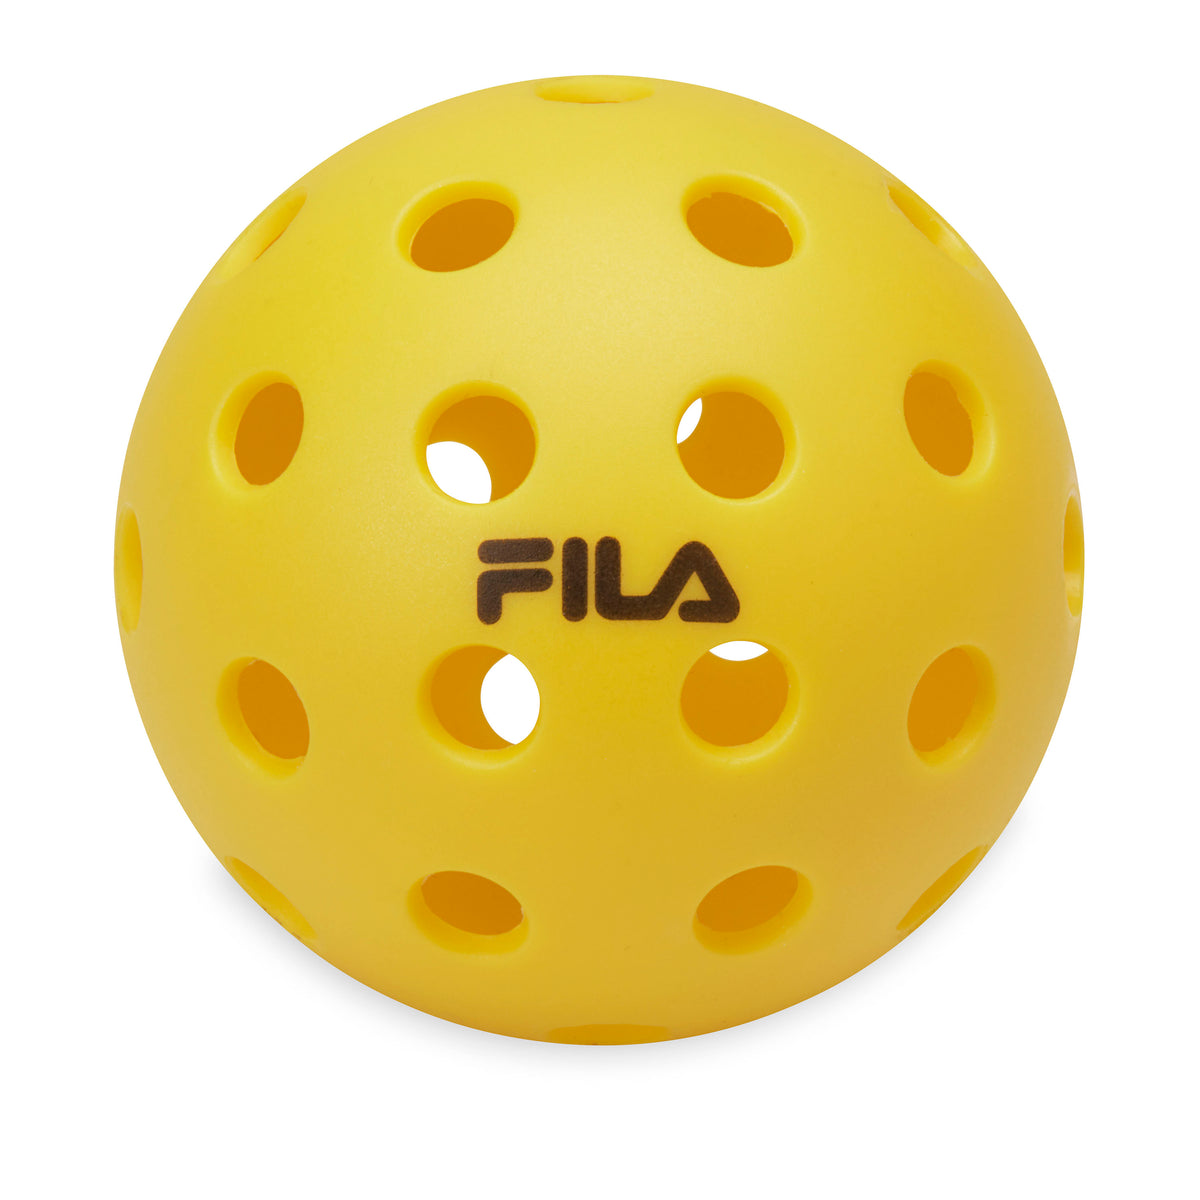 FILA Outdoor Pickleballs (12-Pack) Yellow single ball